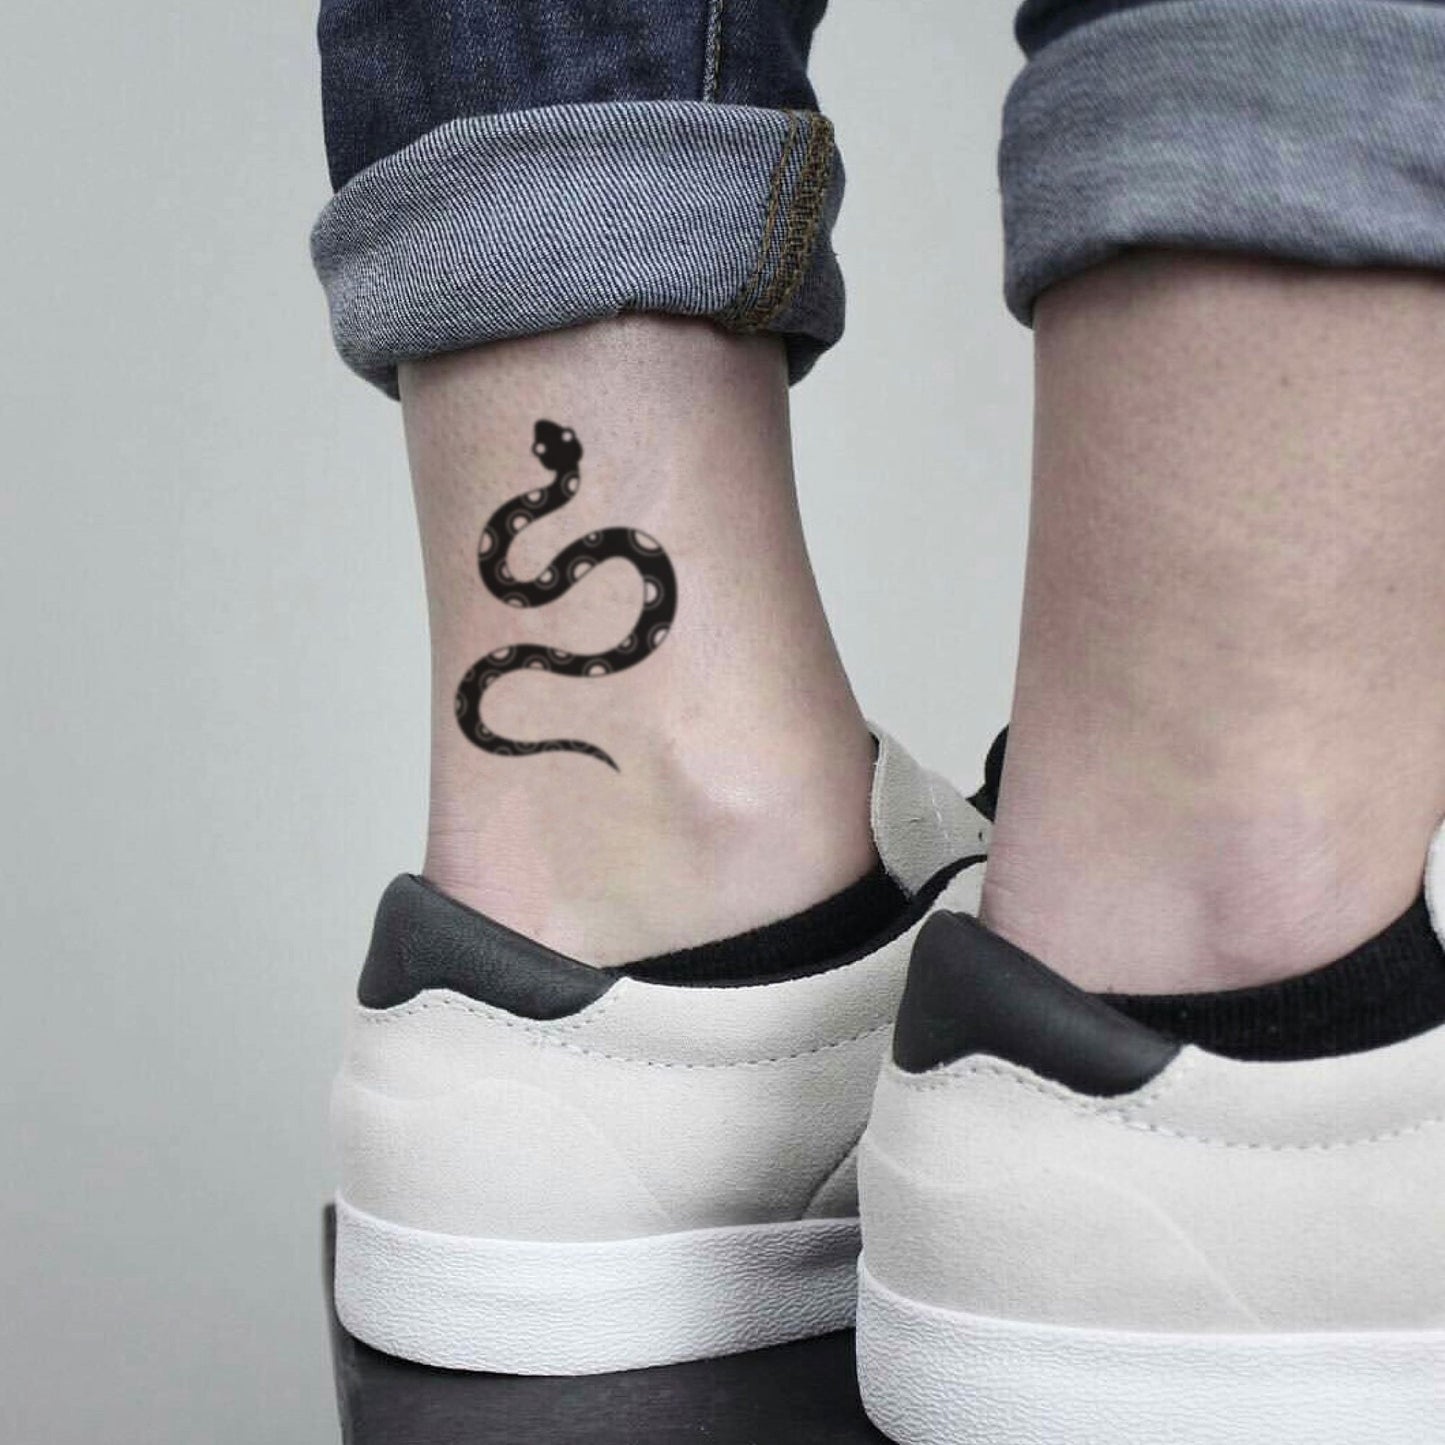 fake small snake foot animal temporary tattoo sticker design idea on ankle leg